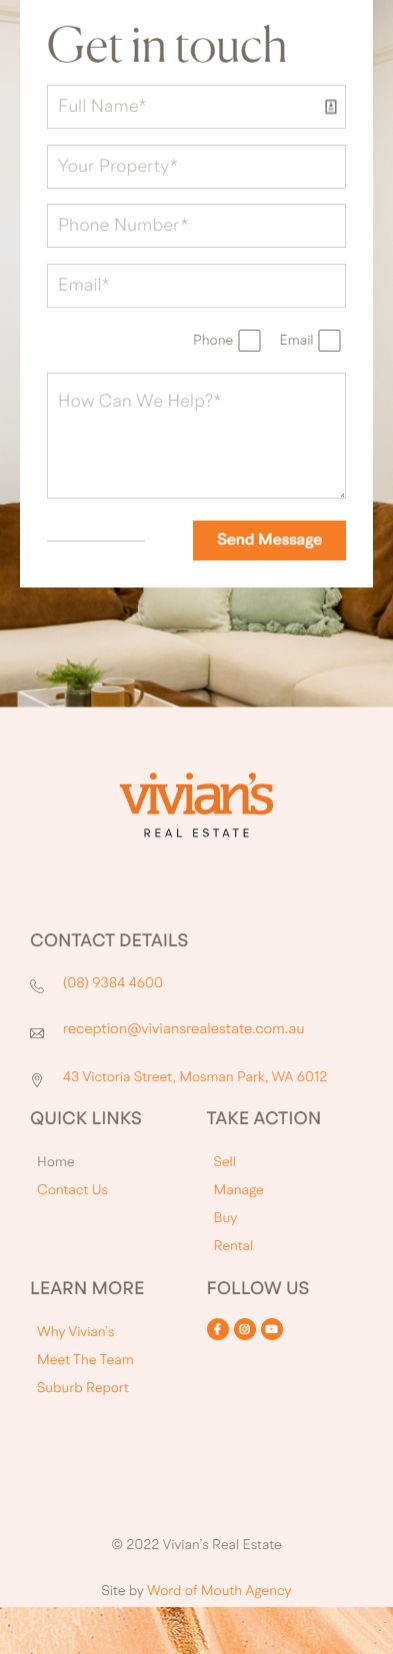 Vivians Real Estate responsive website